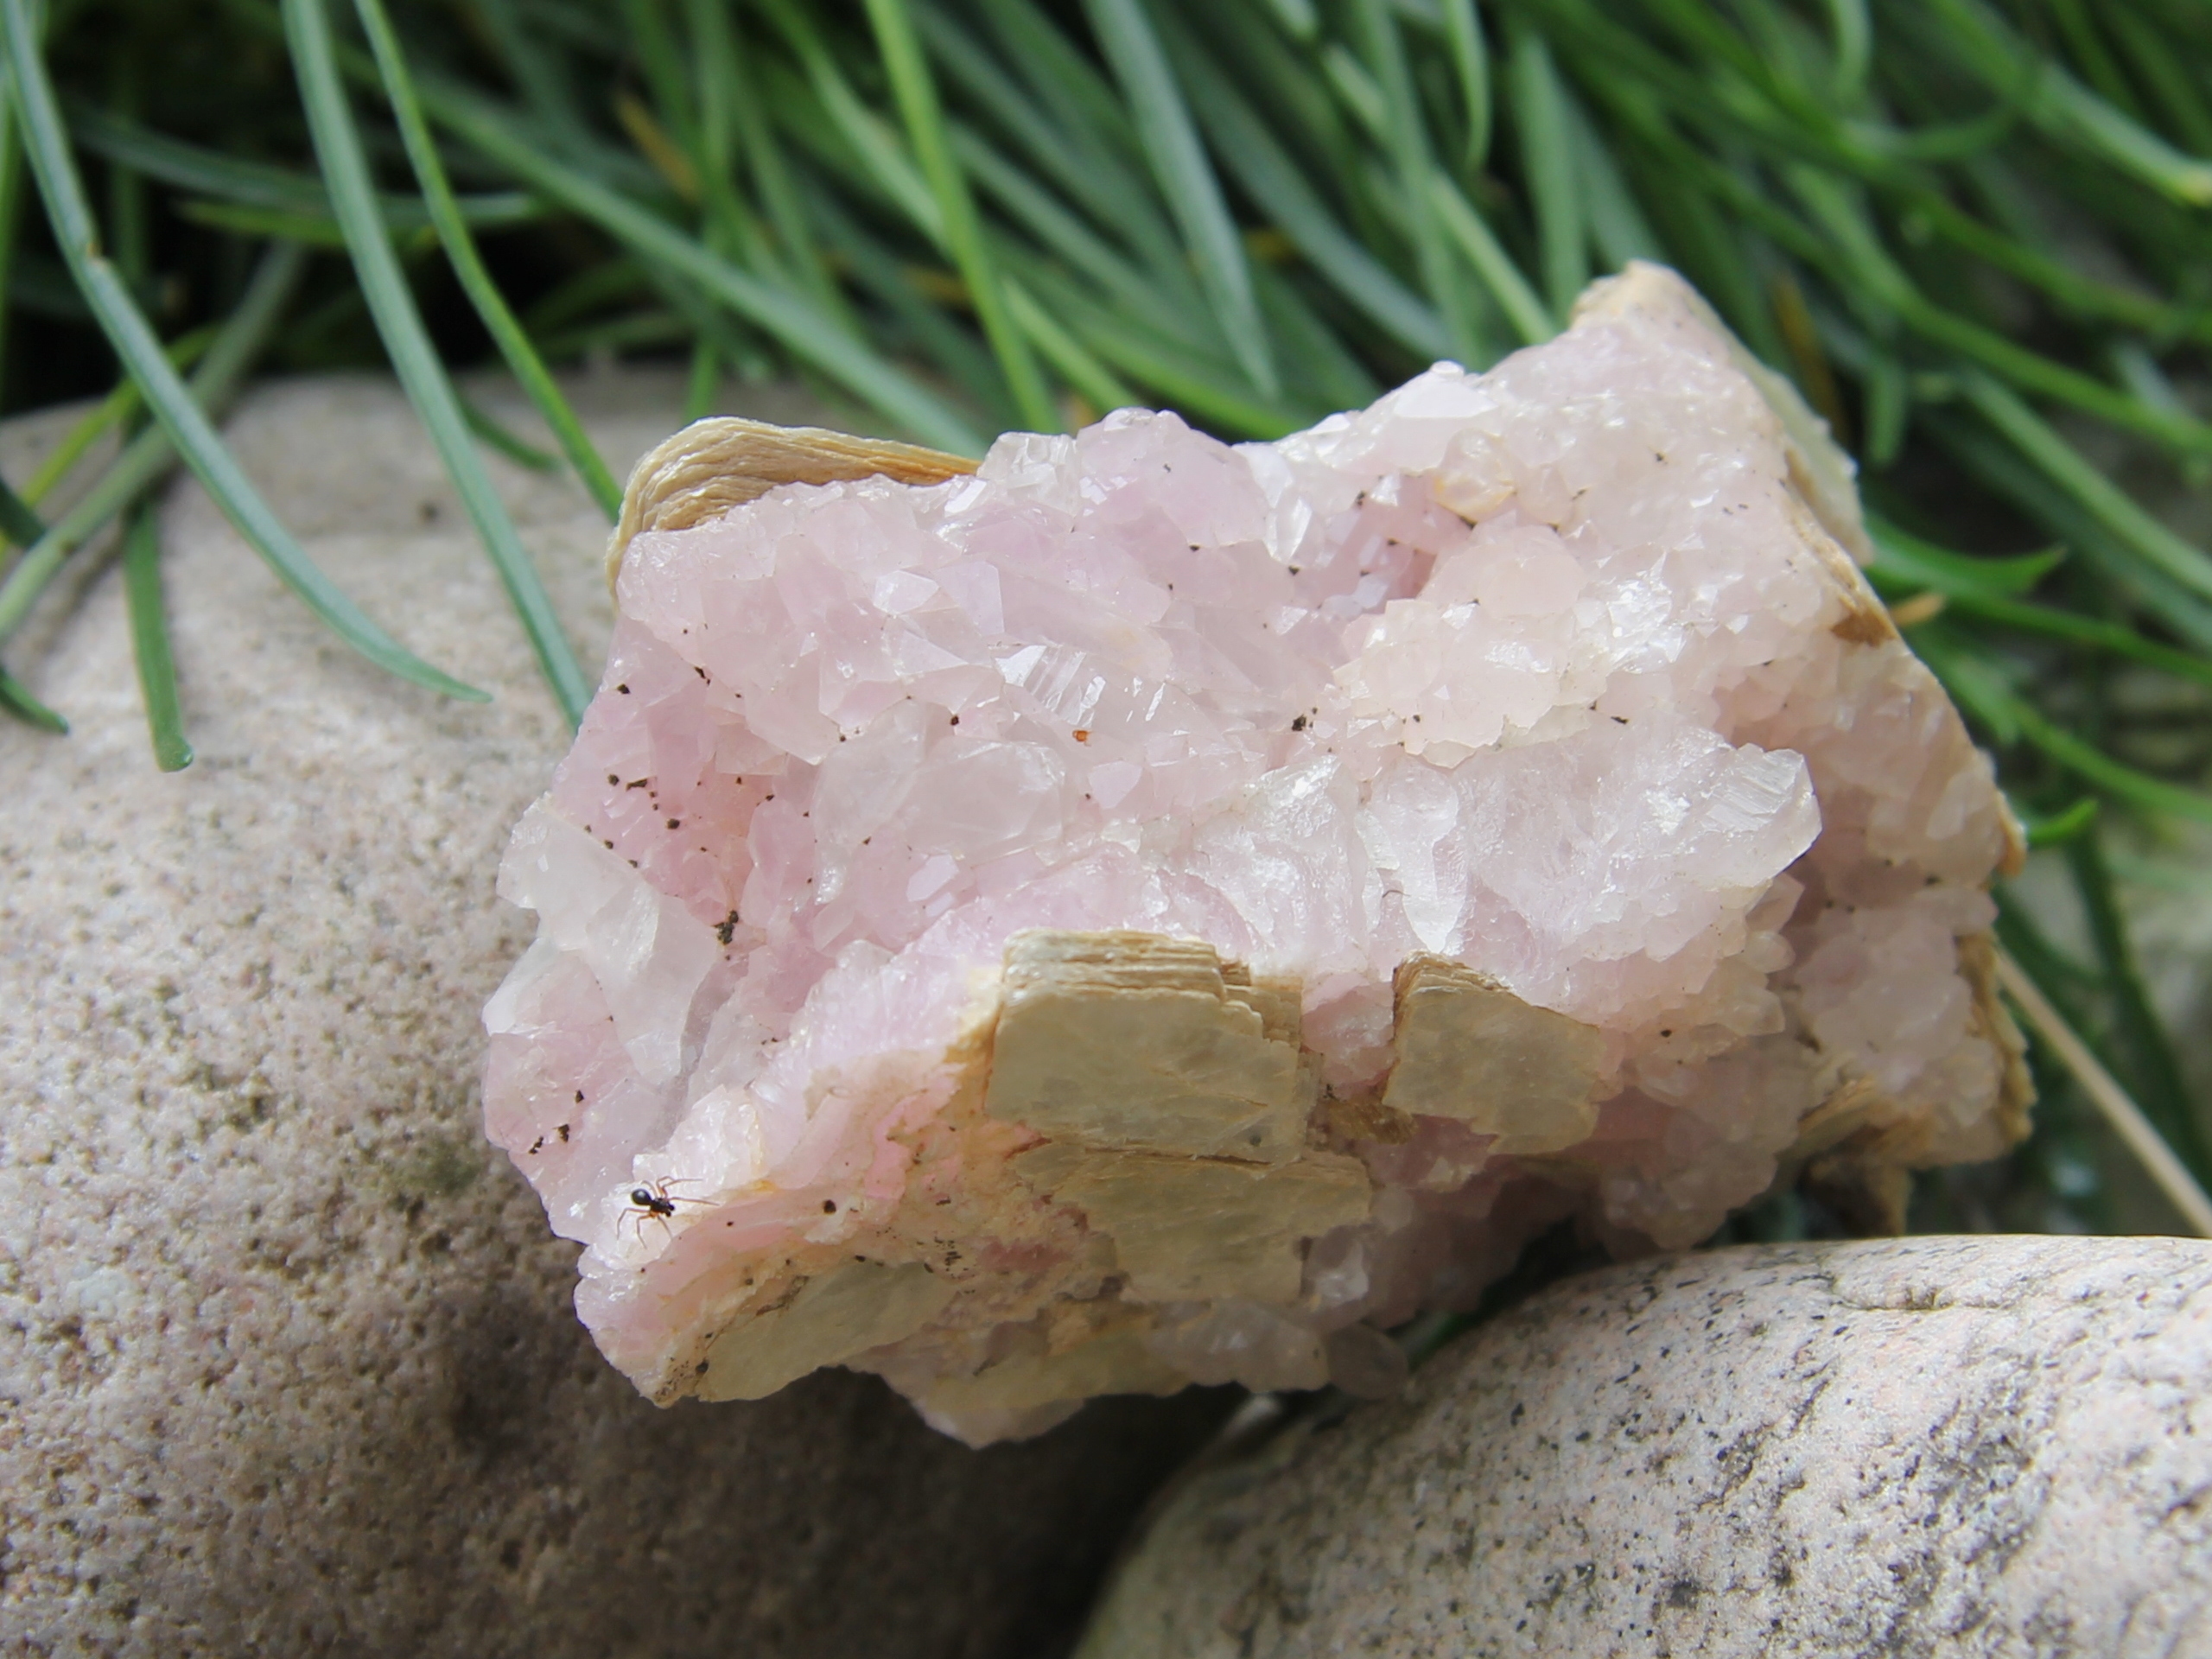 Light-colored rose quartz crystals